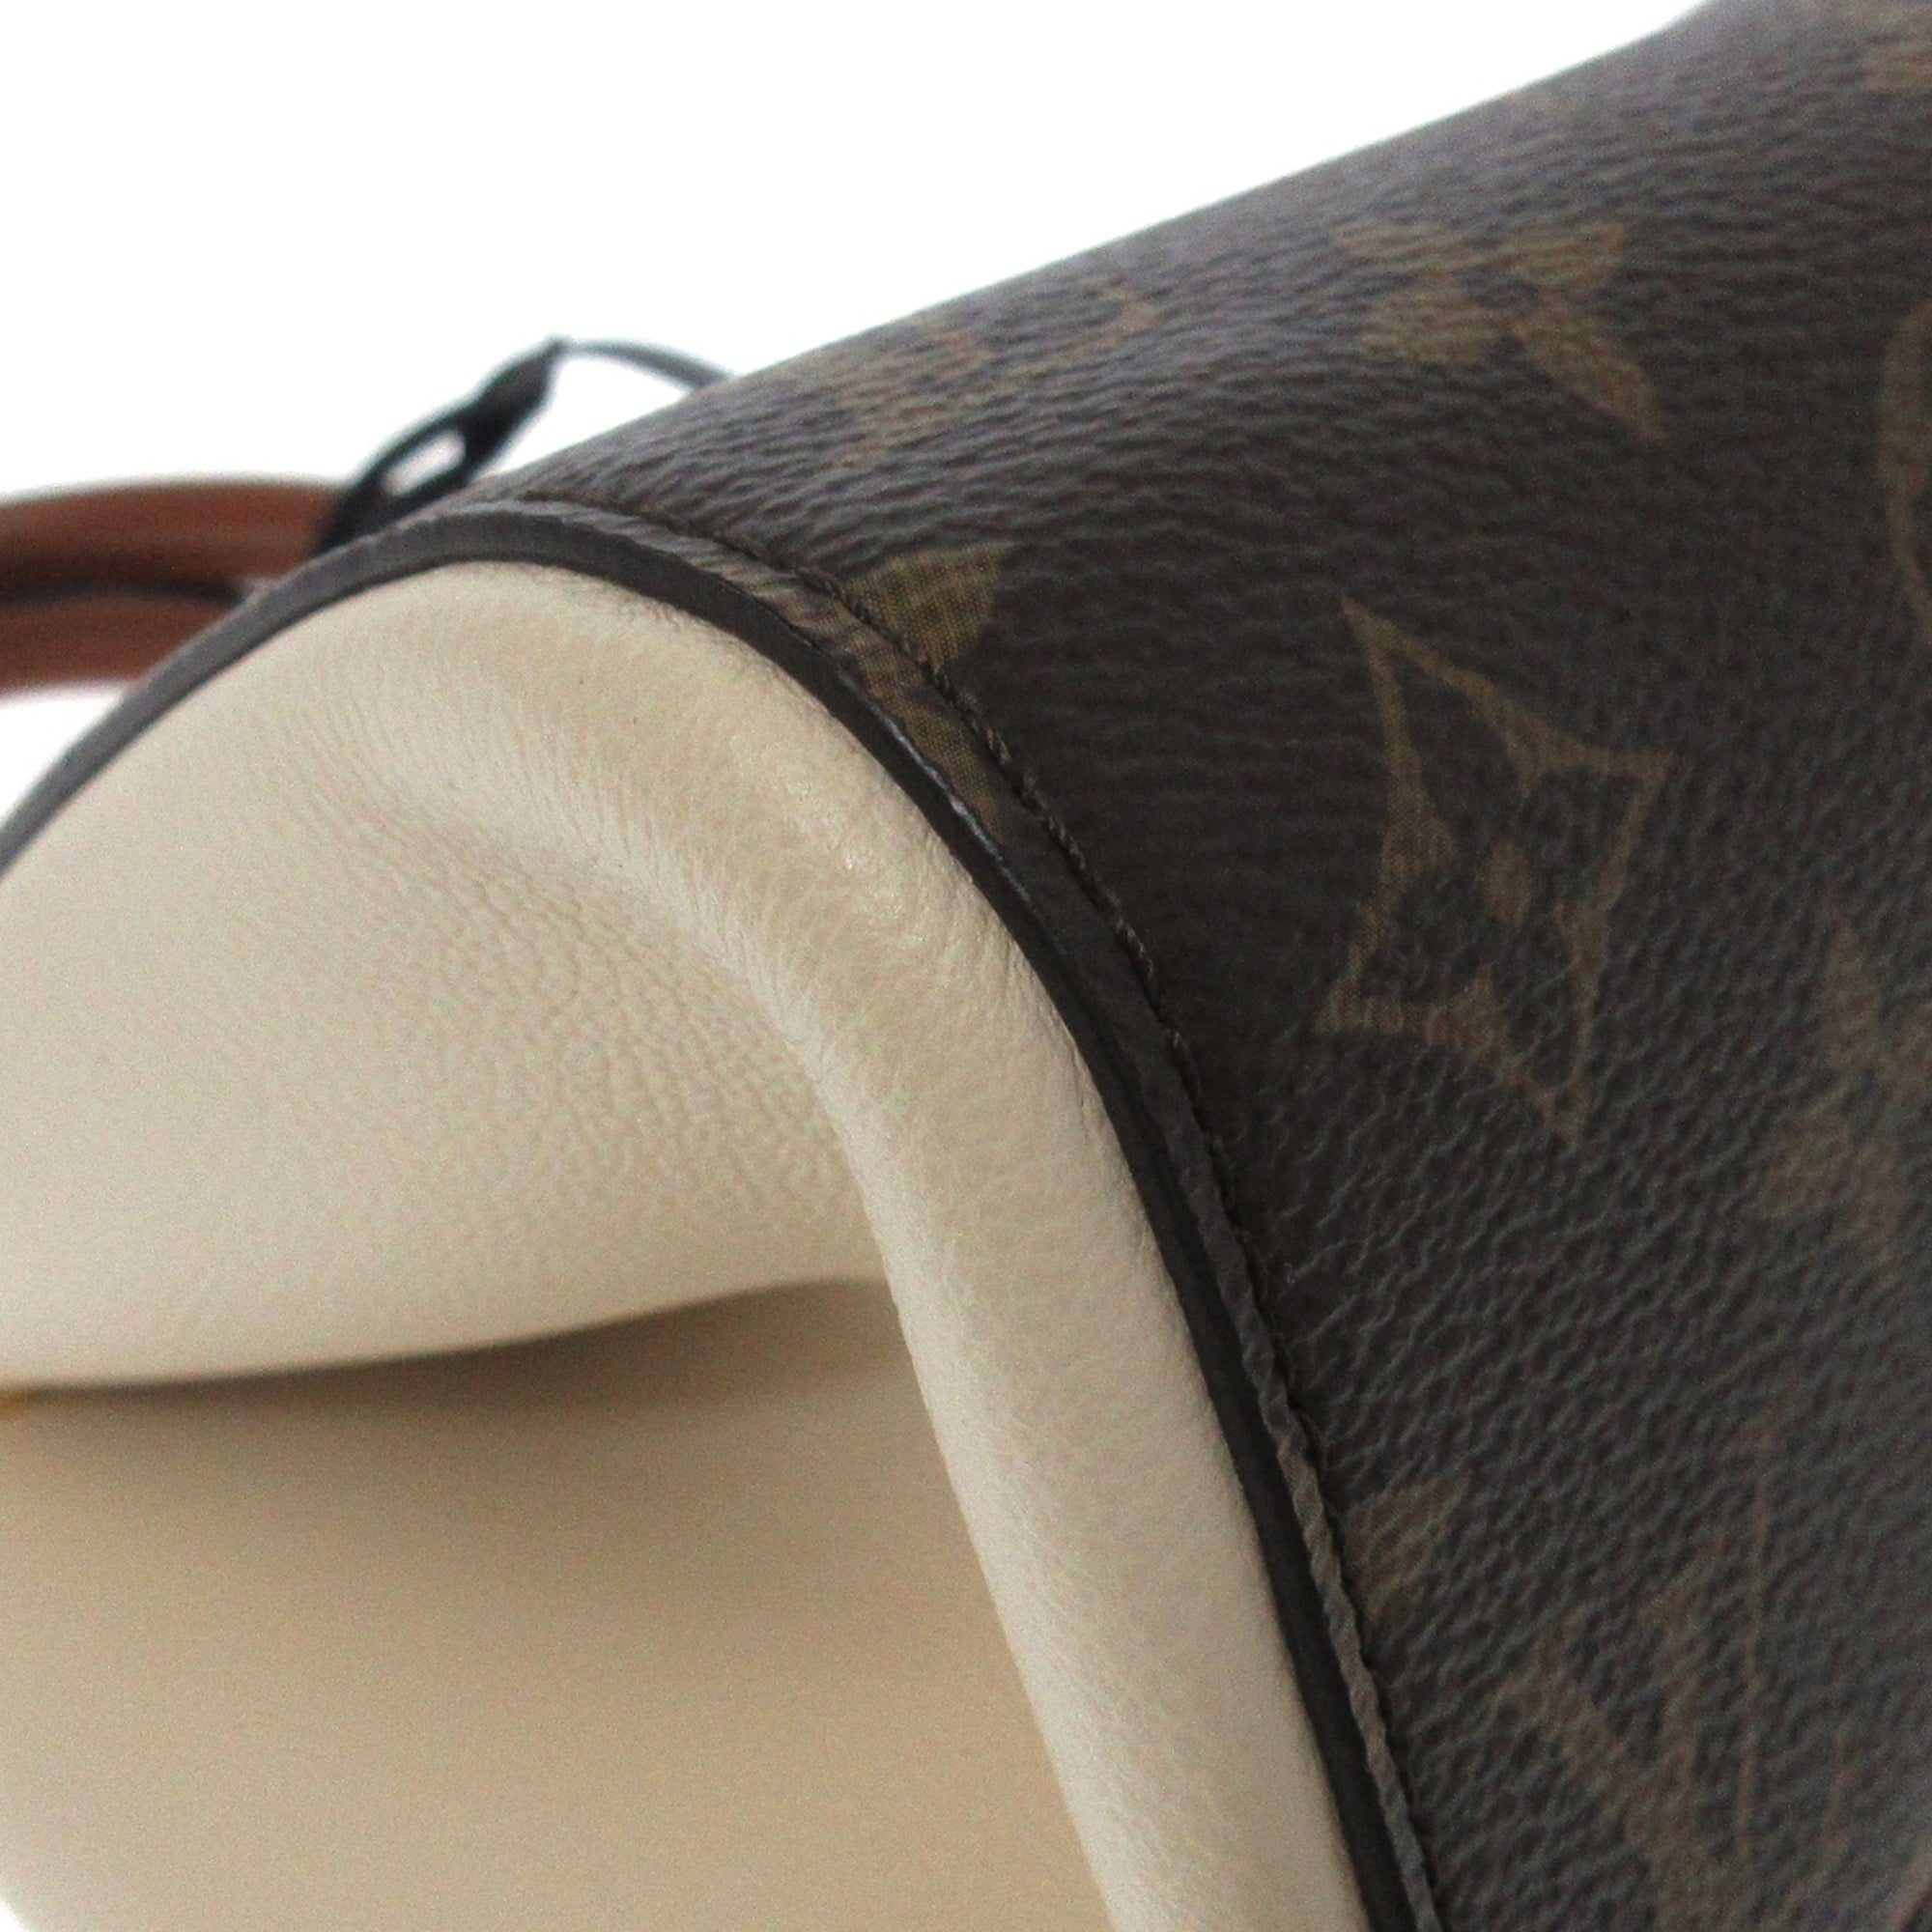 Louis Vuitton Monogram Leather Fold Tote